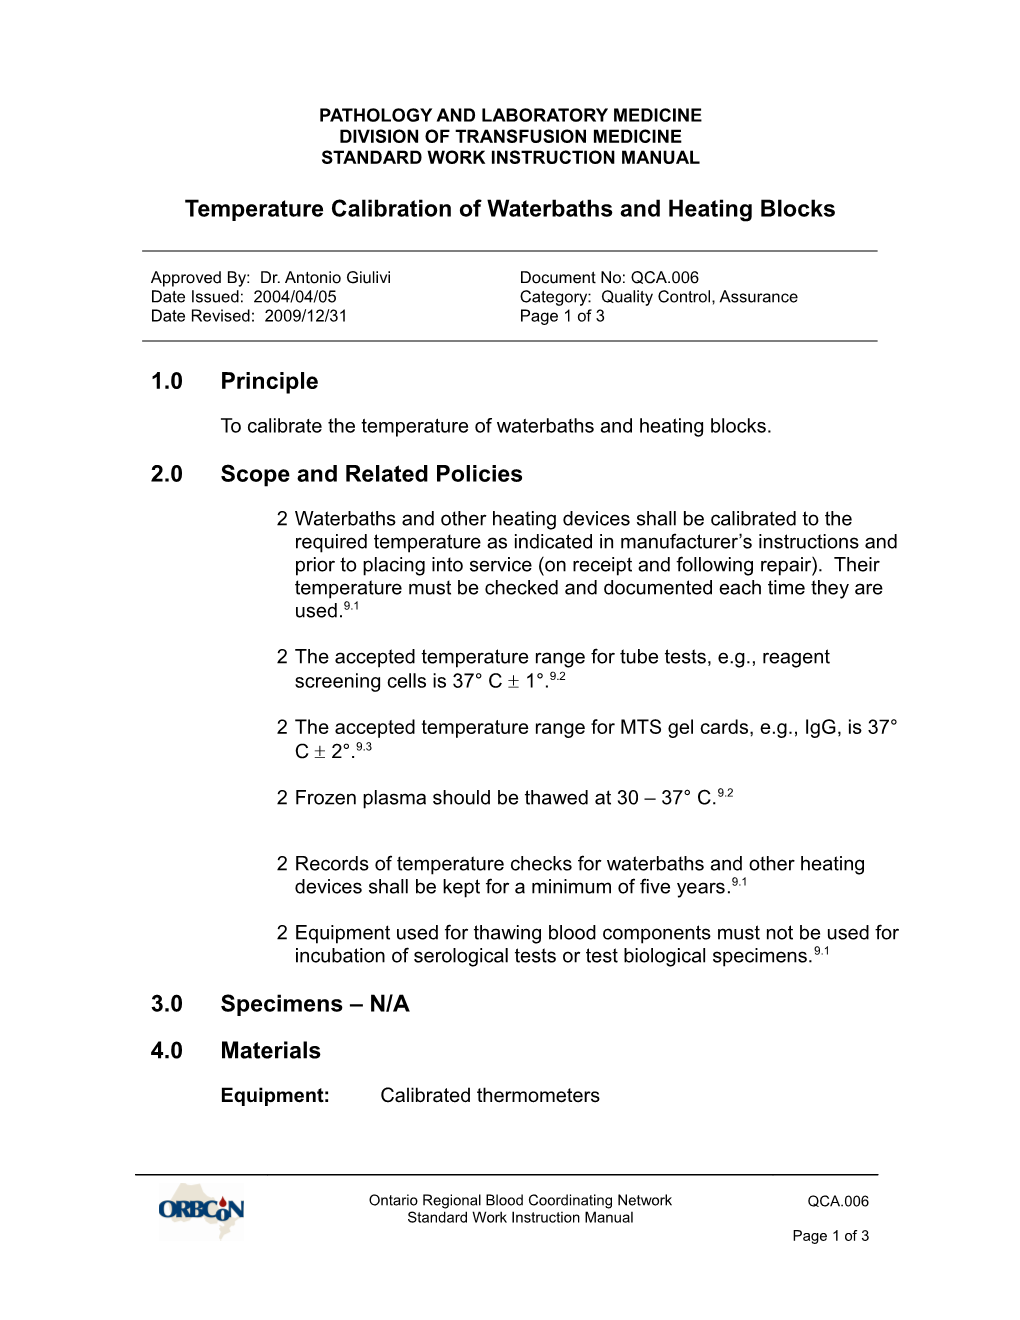 QCA.006 - Temperature Calibration of Waterbaths and Heating Blocks